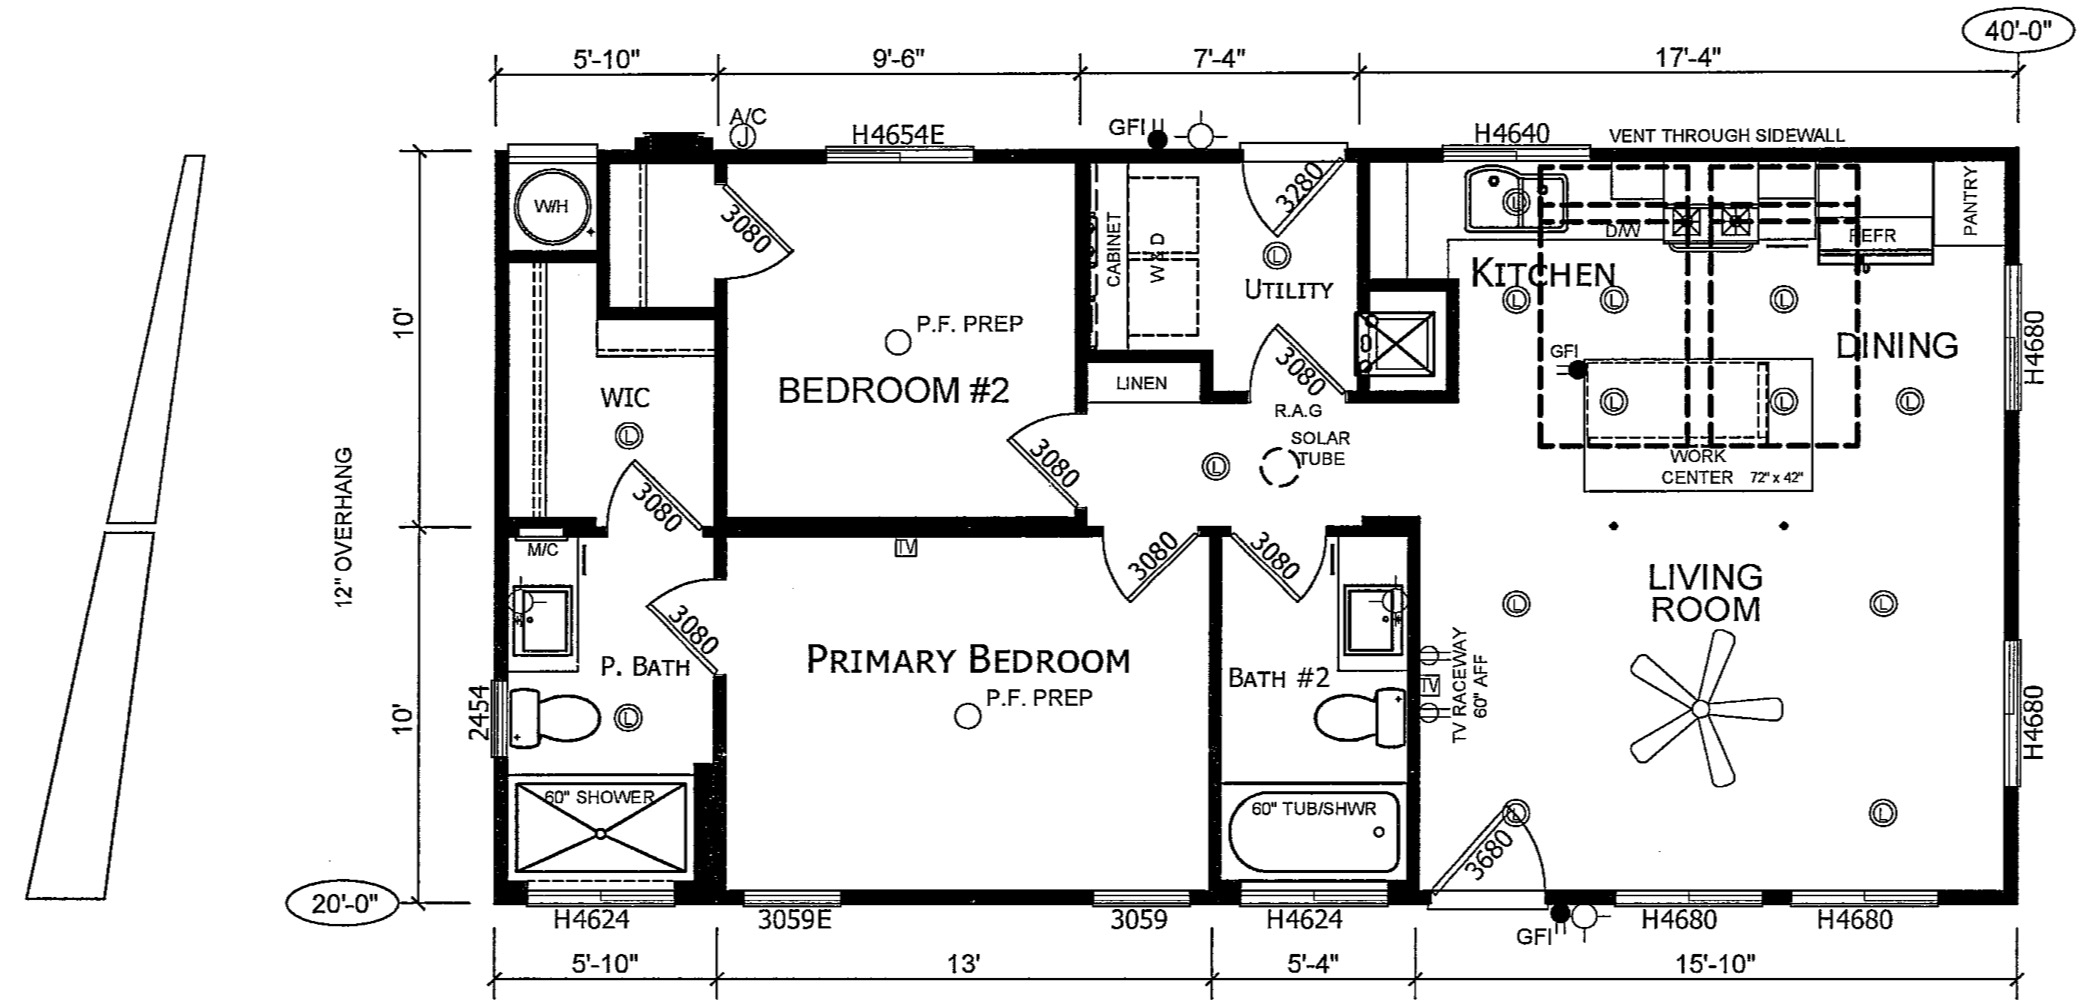 Floor plan of Silvercrest BD-92 manufactured home